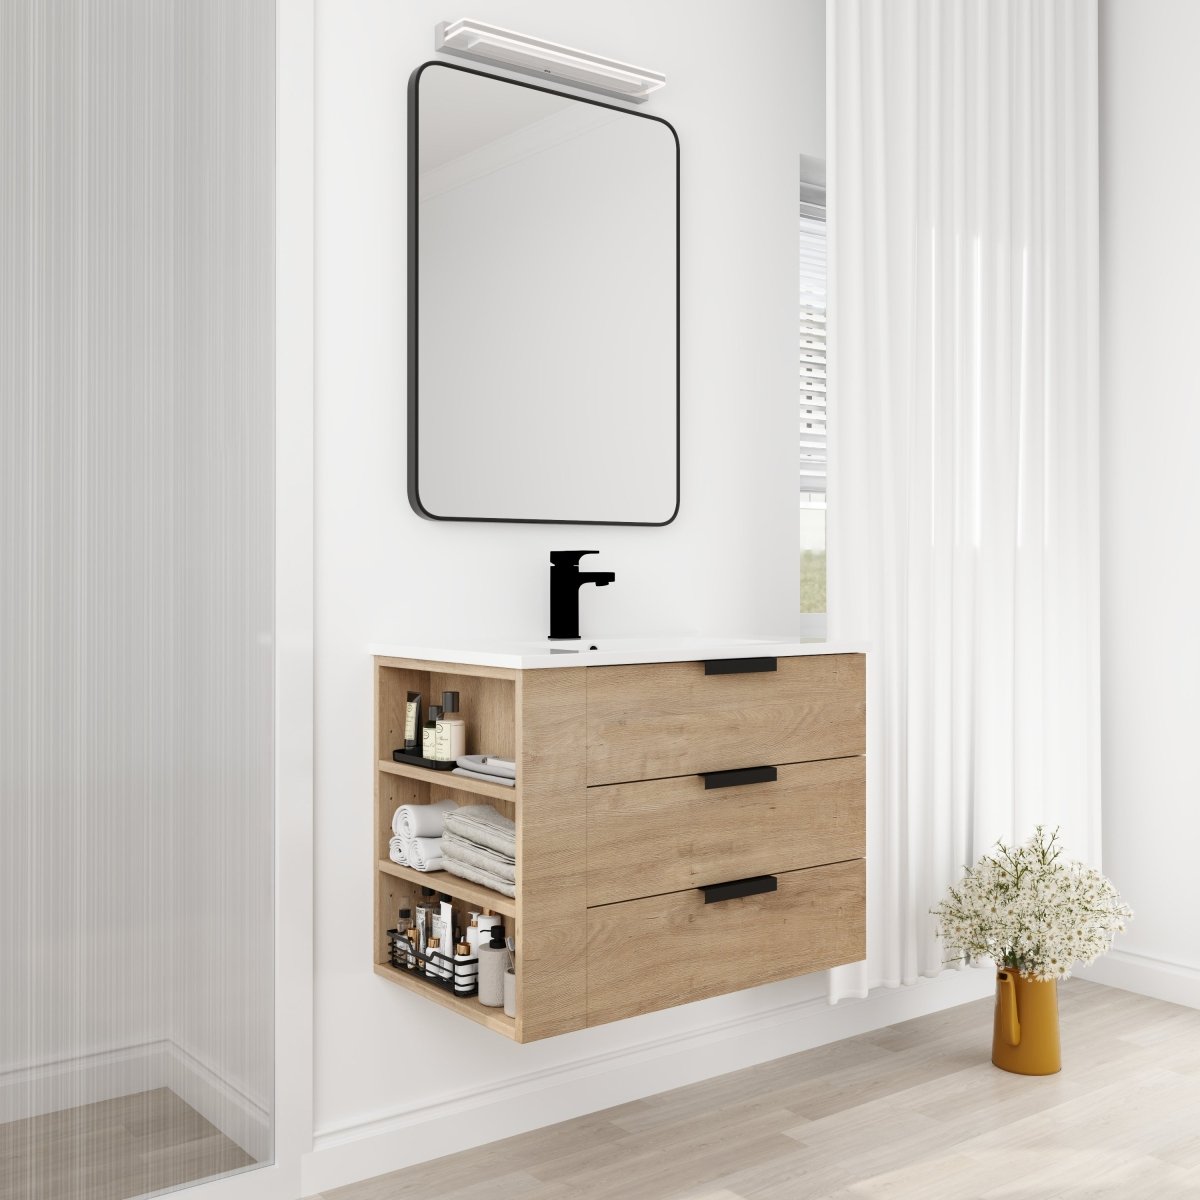 ExBrite 30" Oak Bathroom Vanity With Top Adjustable Side Shelf